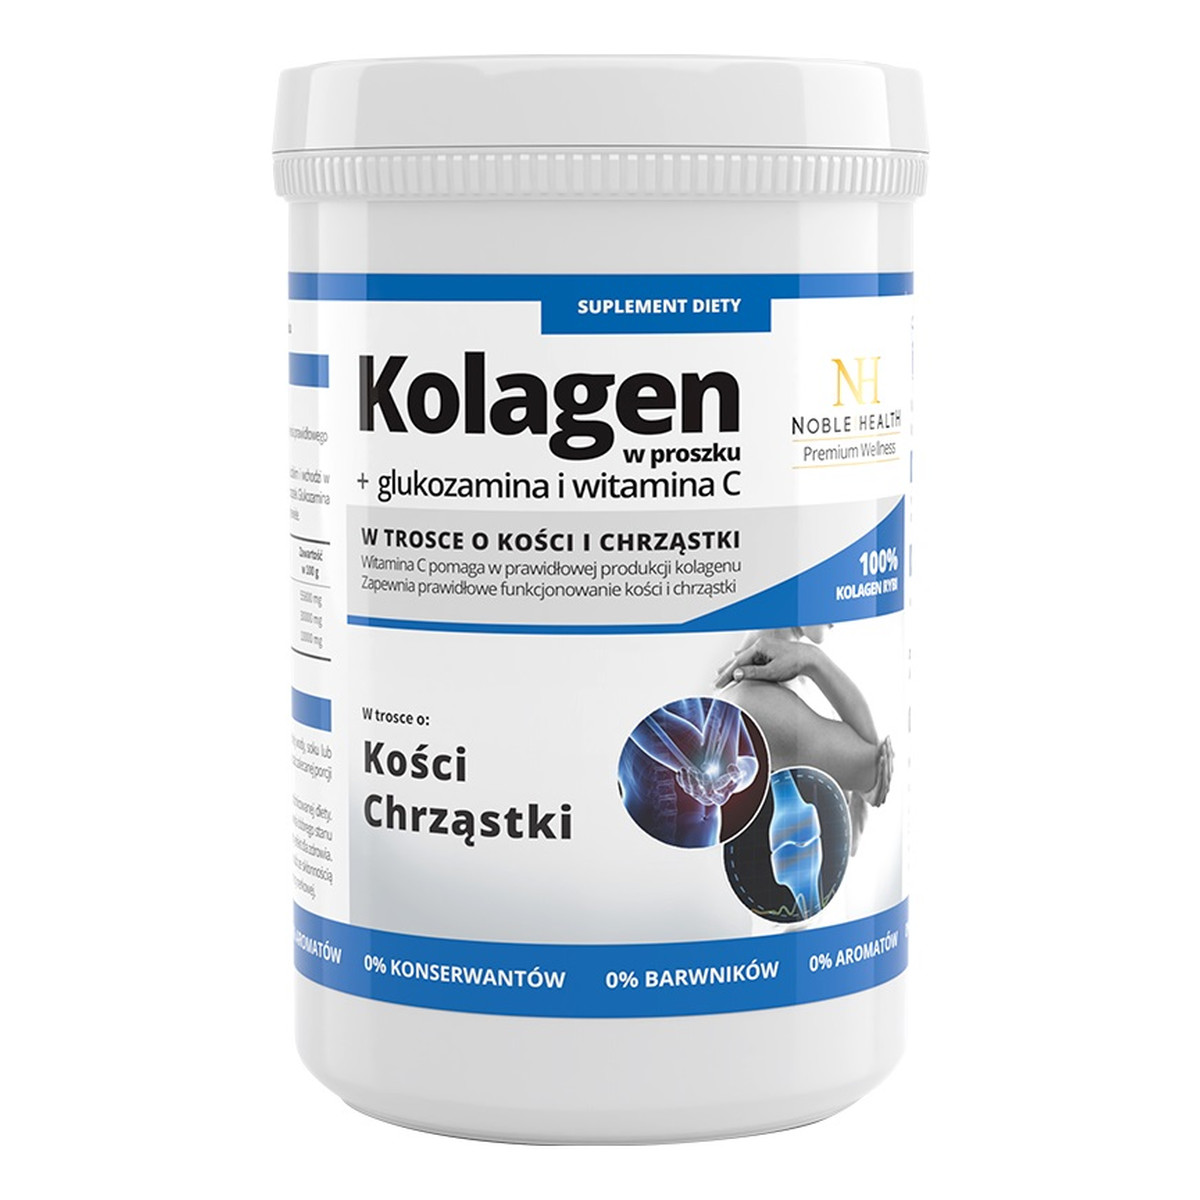 Noble Health Premium Wellness kolagen w proszku + glukozamina i witamina C 100g